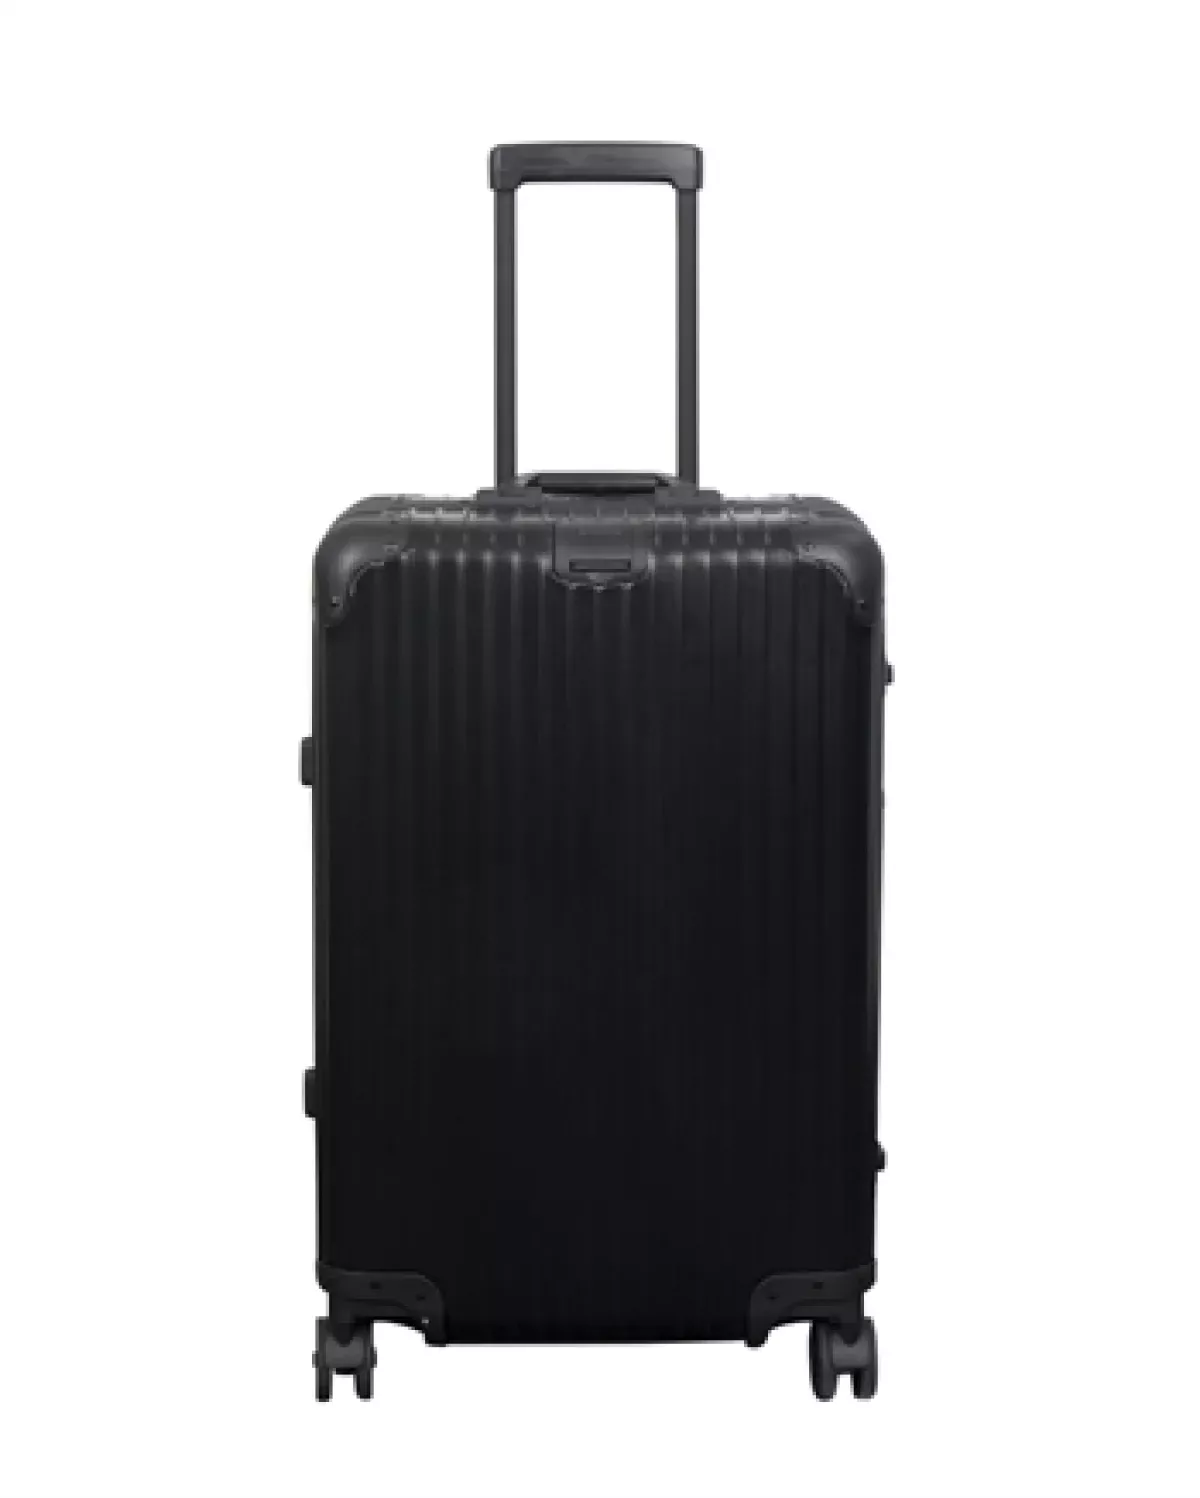 #2 - Aluminiums kuffert - Sort - 68 liter - Luksuriøs rejsekuffert med TSA lås